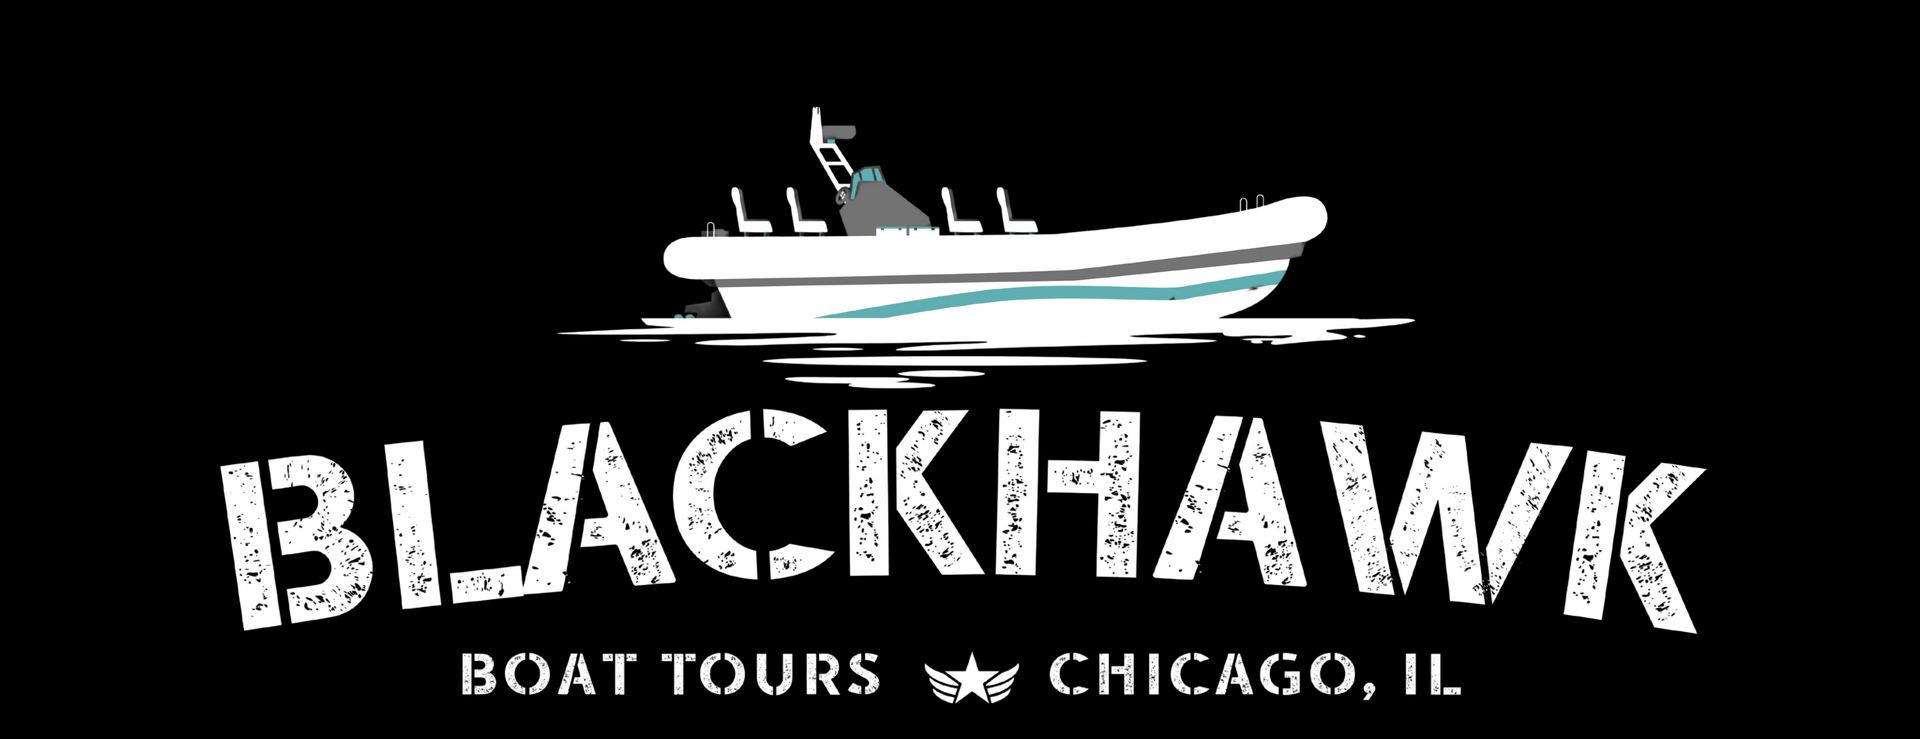 chicago river private boat tours